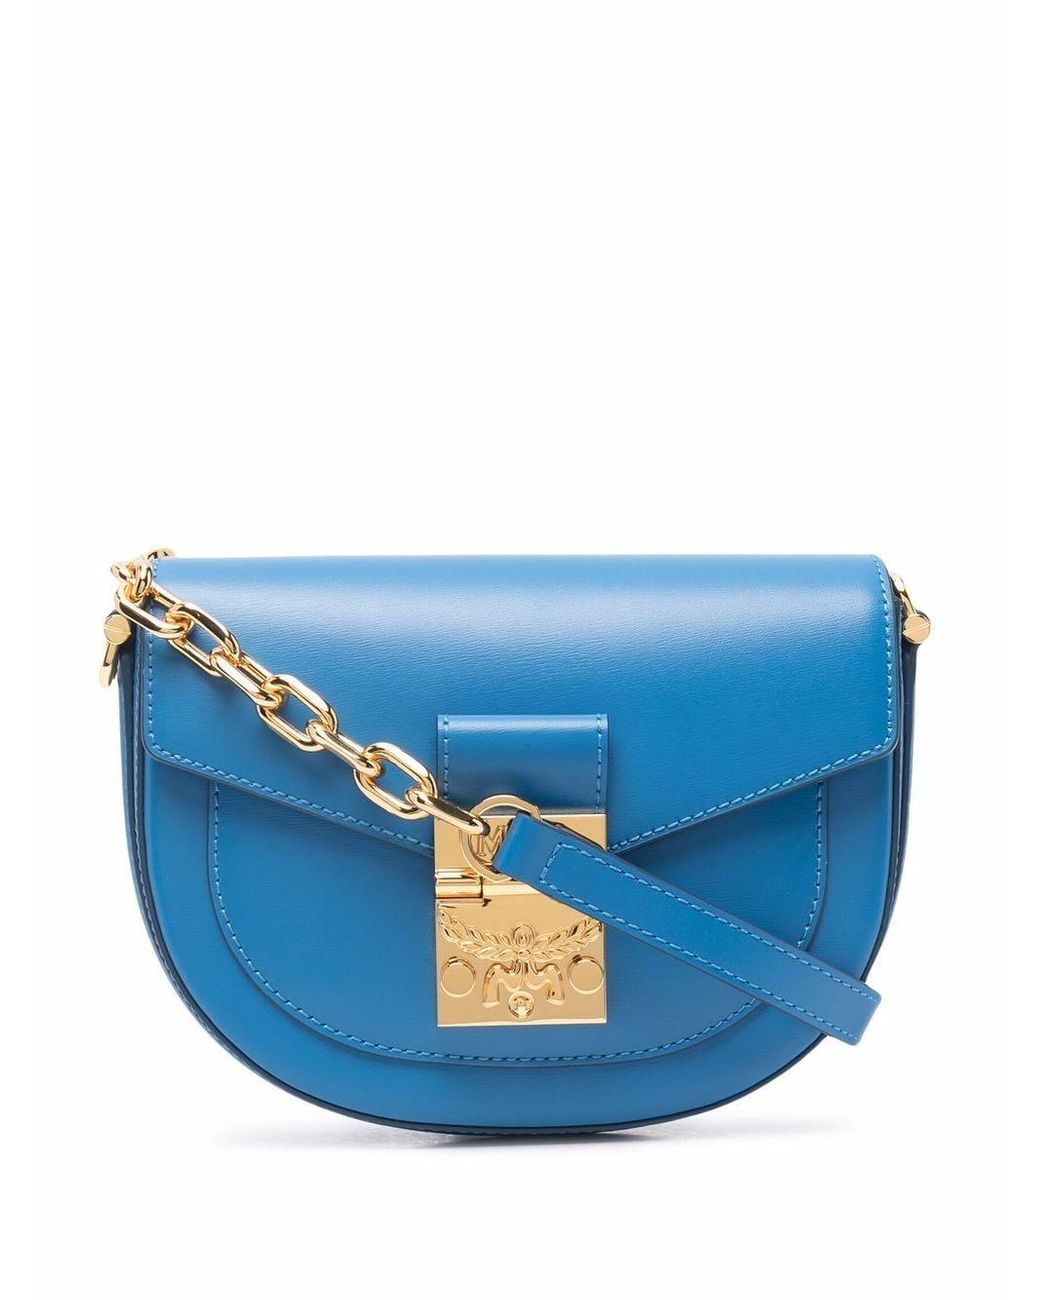 MCM Canvas Mini Patricia Crossbody Bag in Blue - Lyst